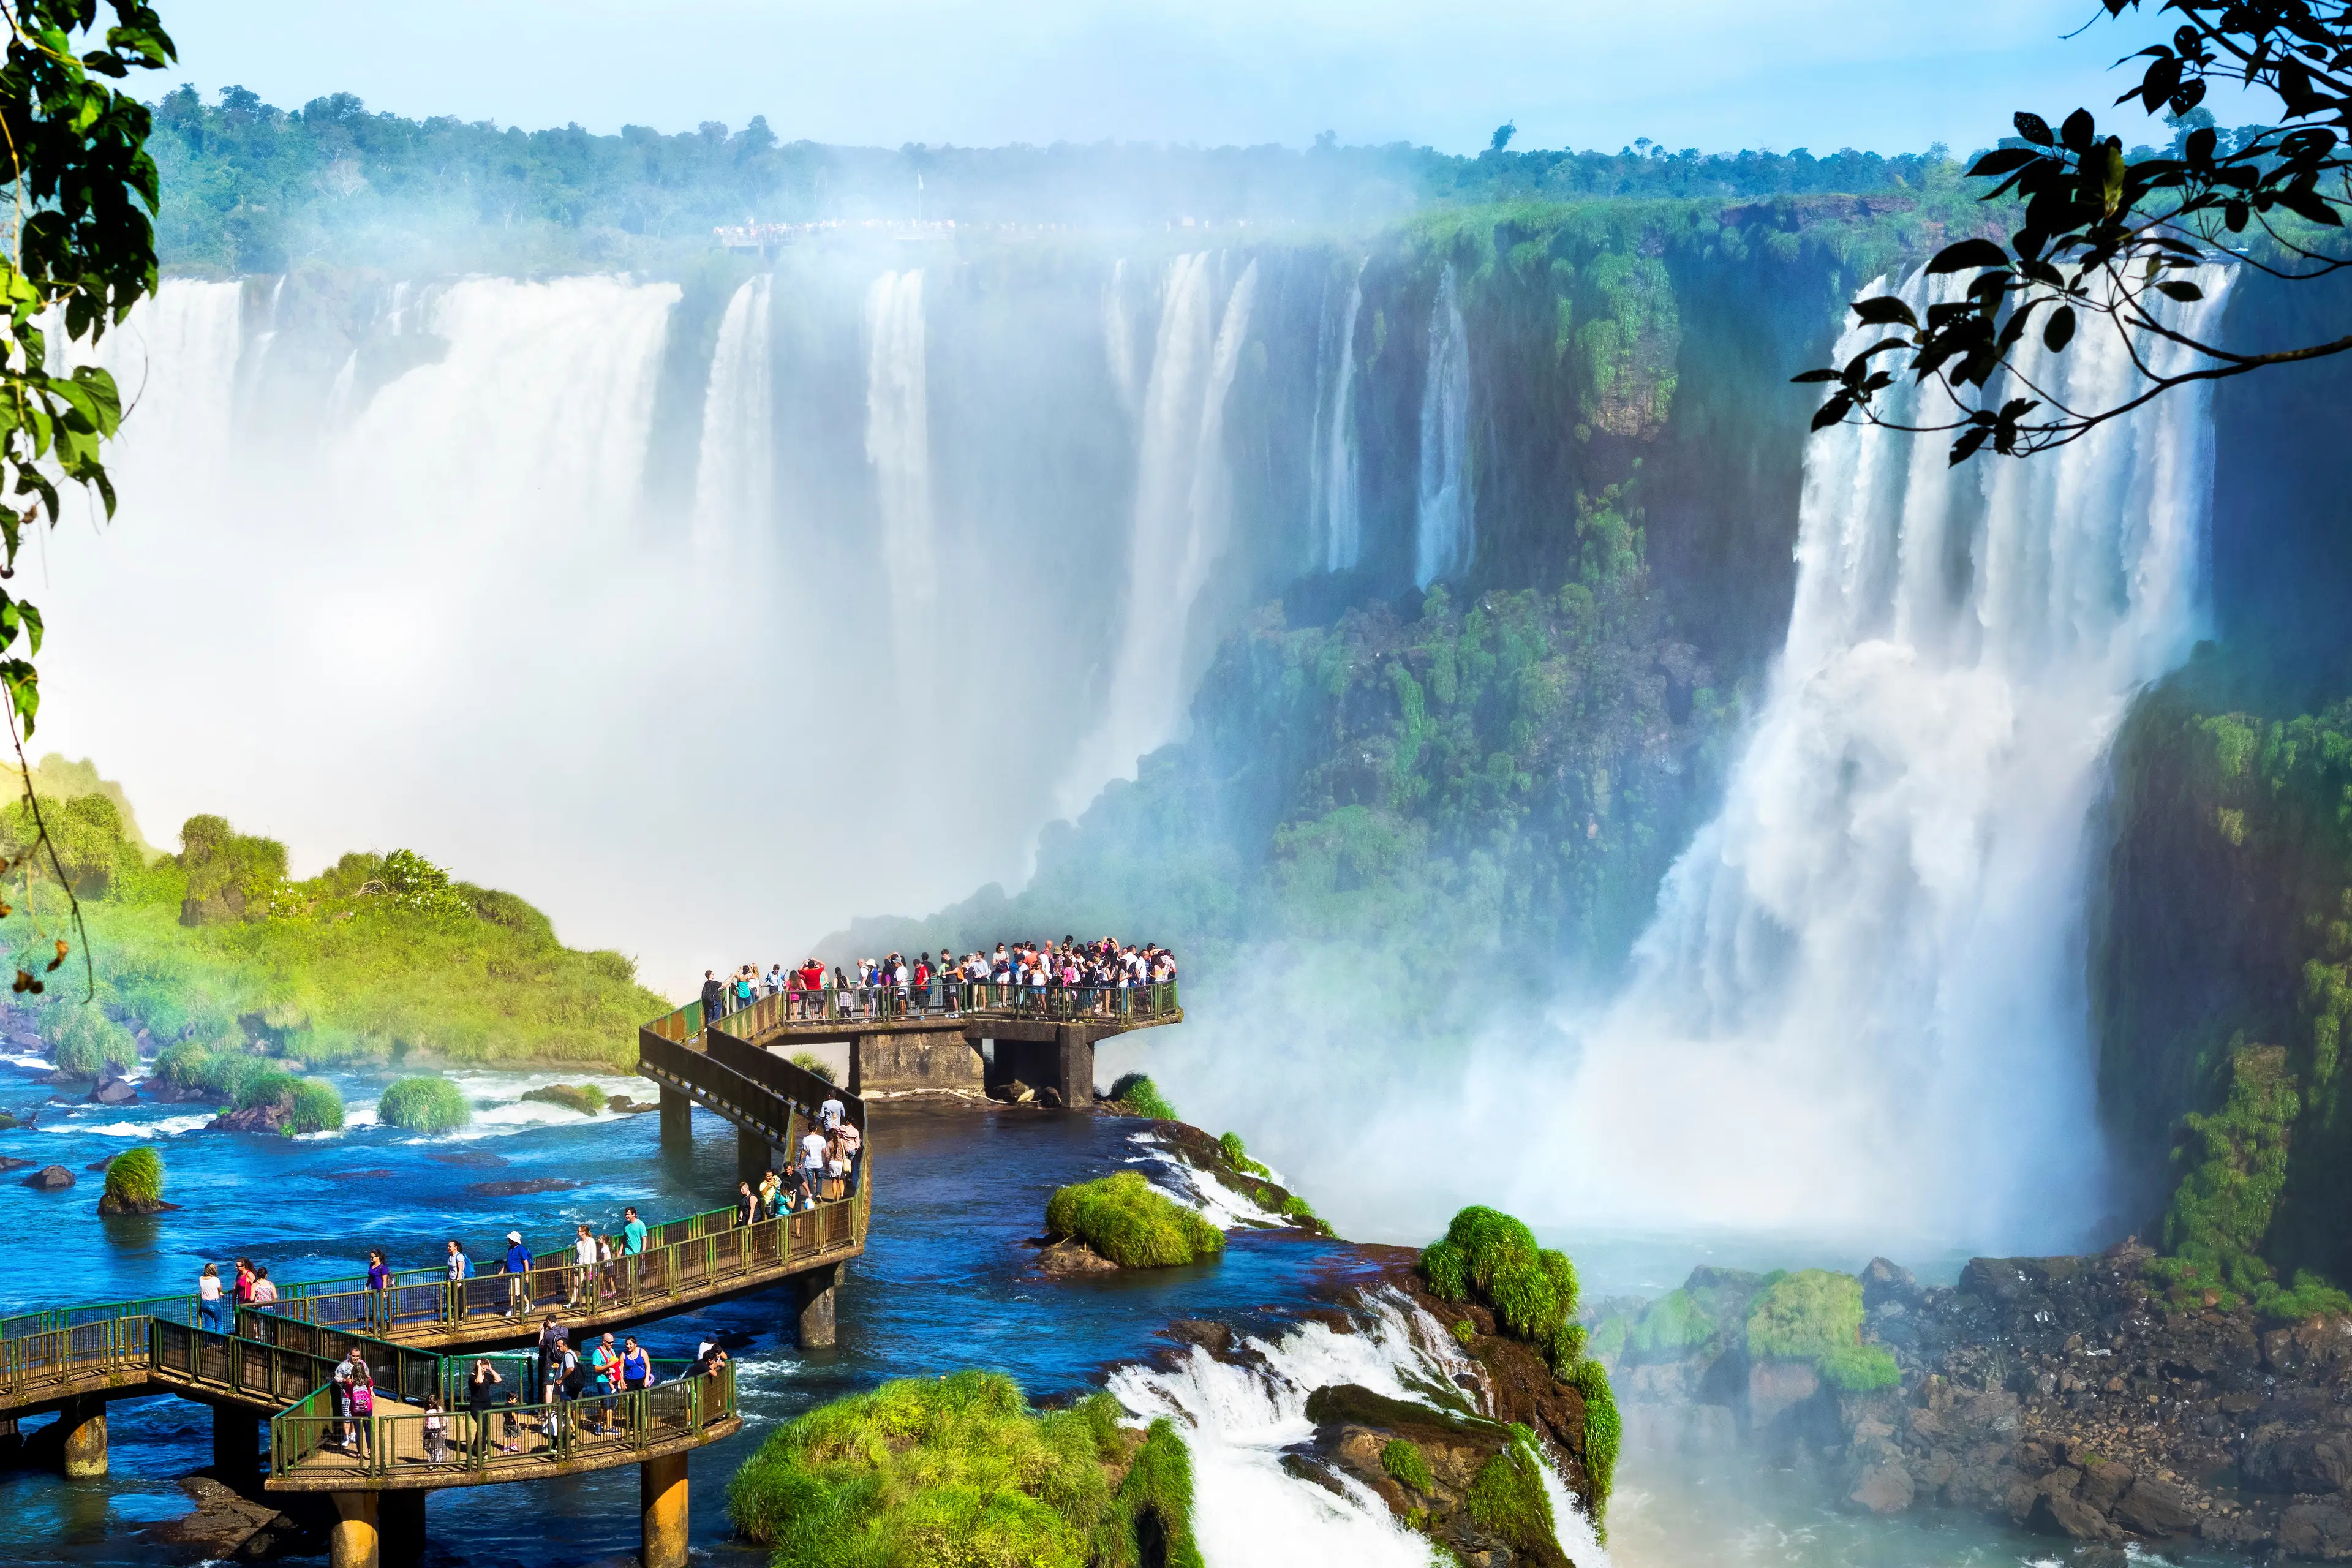 1-Day Romantic Sightseeing Adventure at Iguazu Falls, Brazil